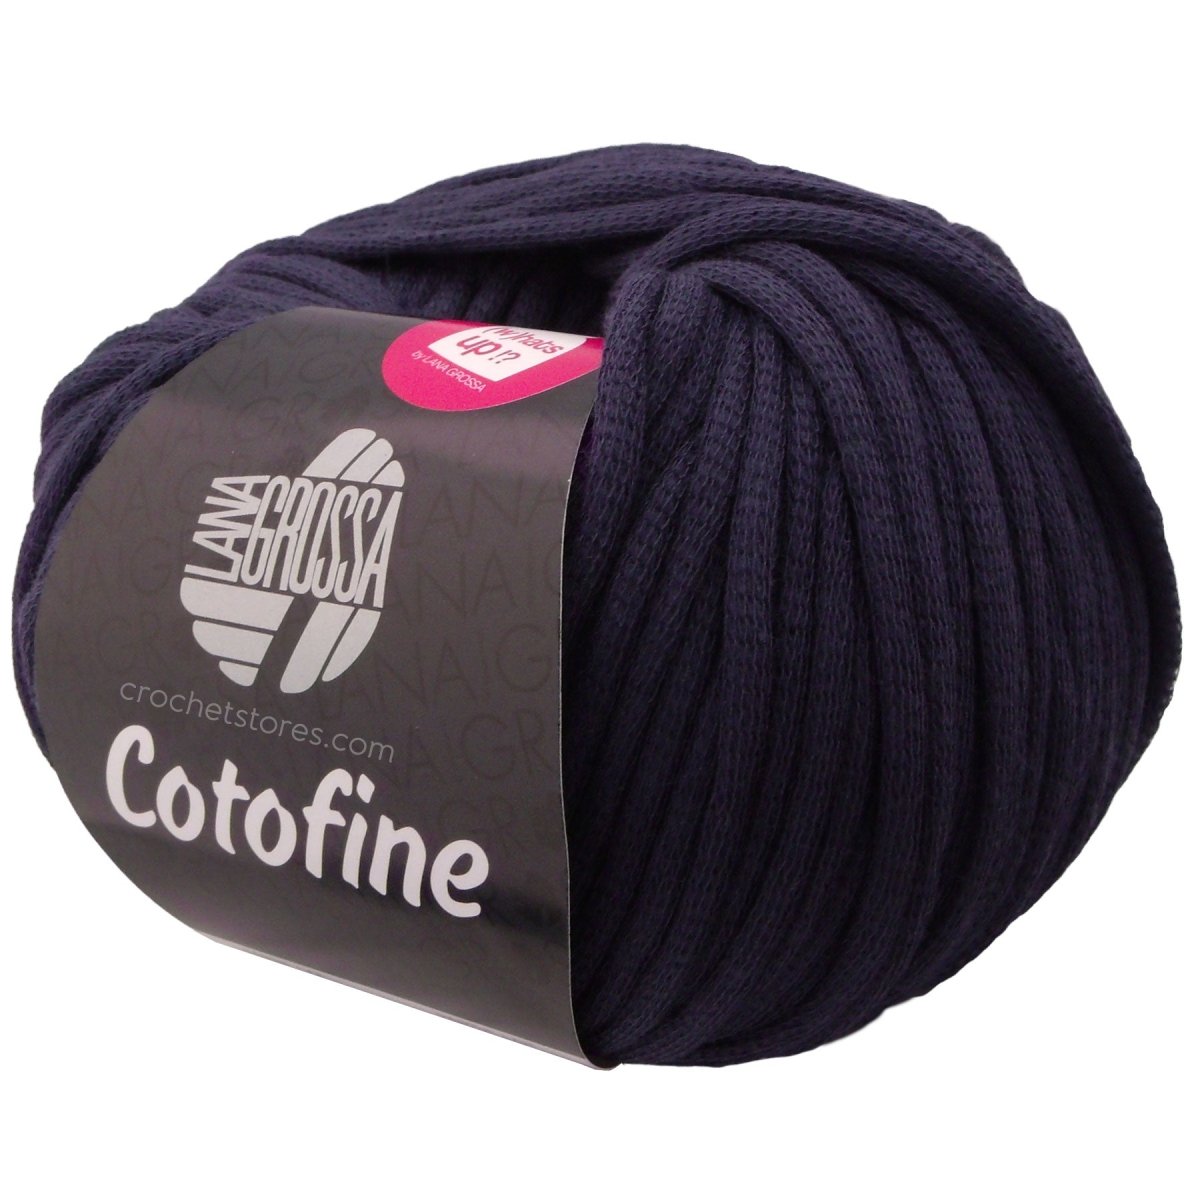 COTOFINE - Crochetstores276-00184033493119771